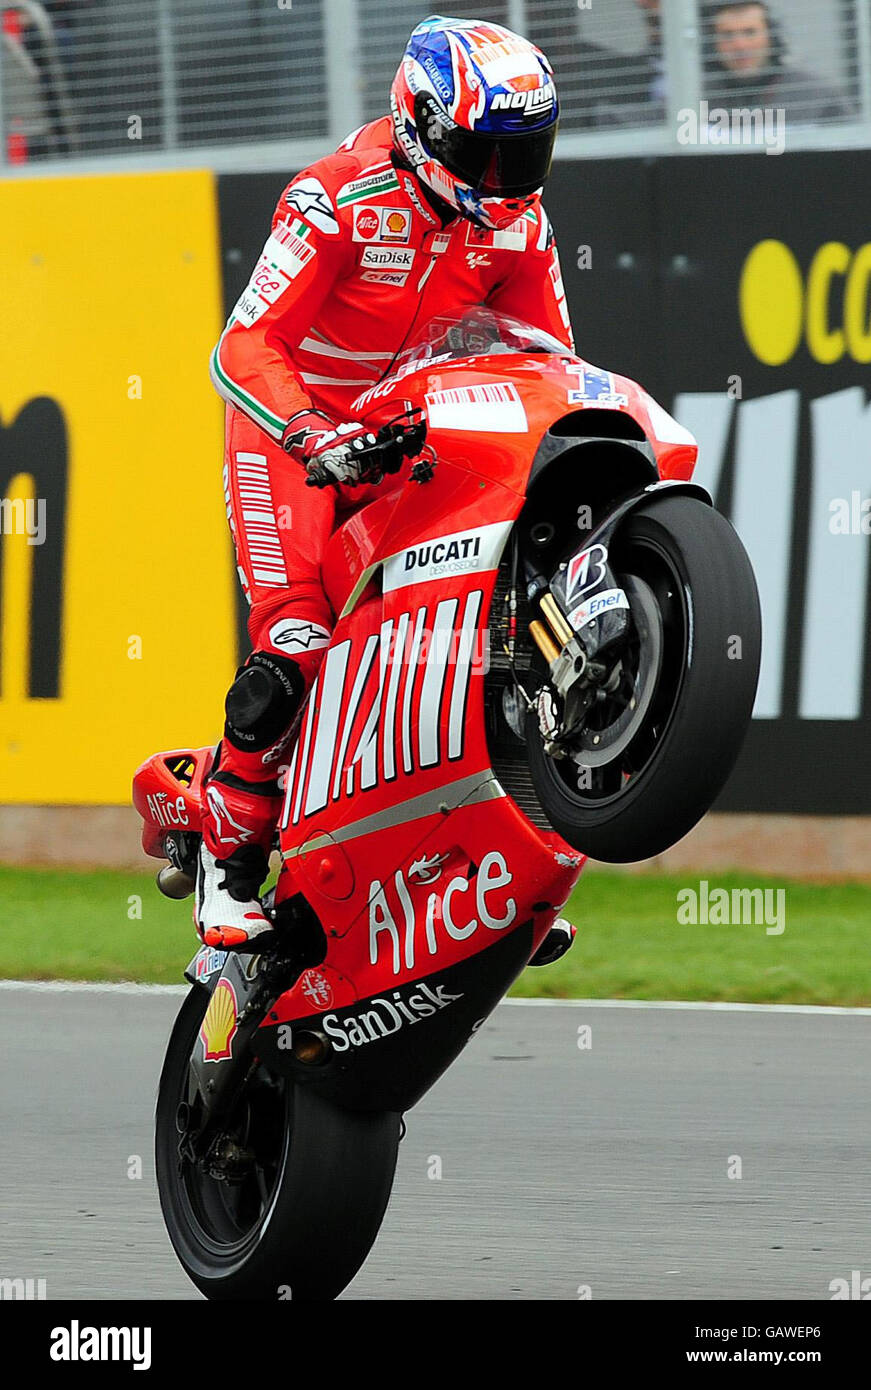 Ducati's Casey Stoner celebrates after winning the bwin.com British Motorcycle Grand Prix at Donington Park. Stock Photo